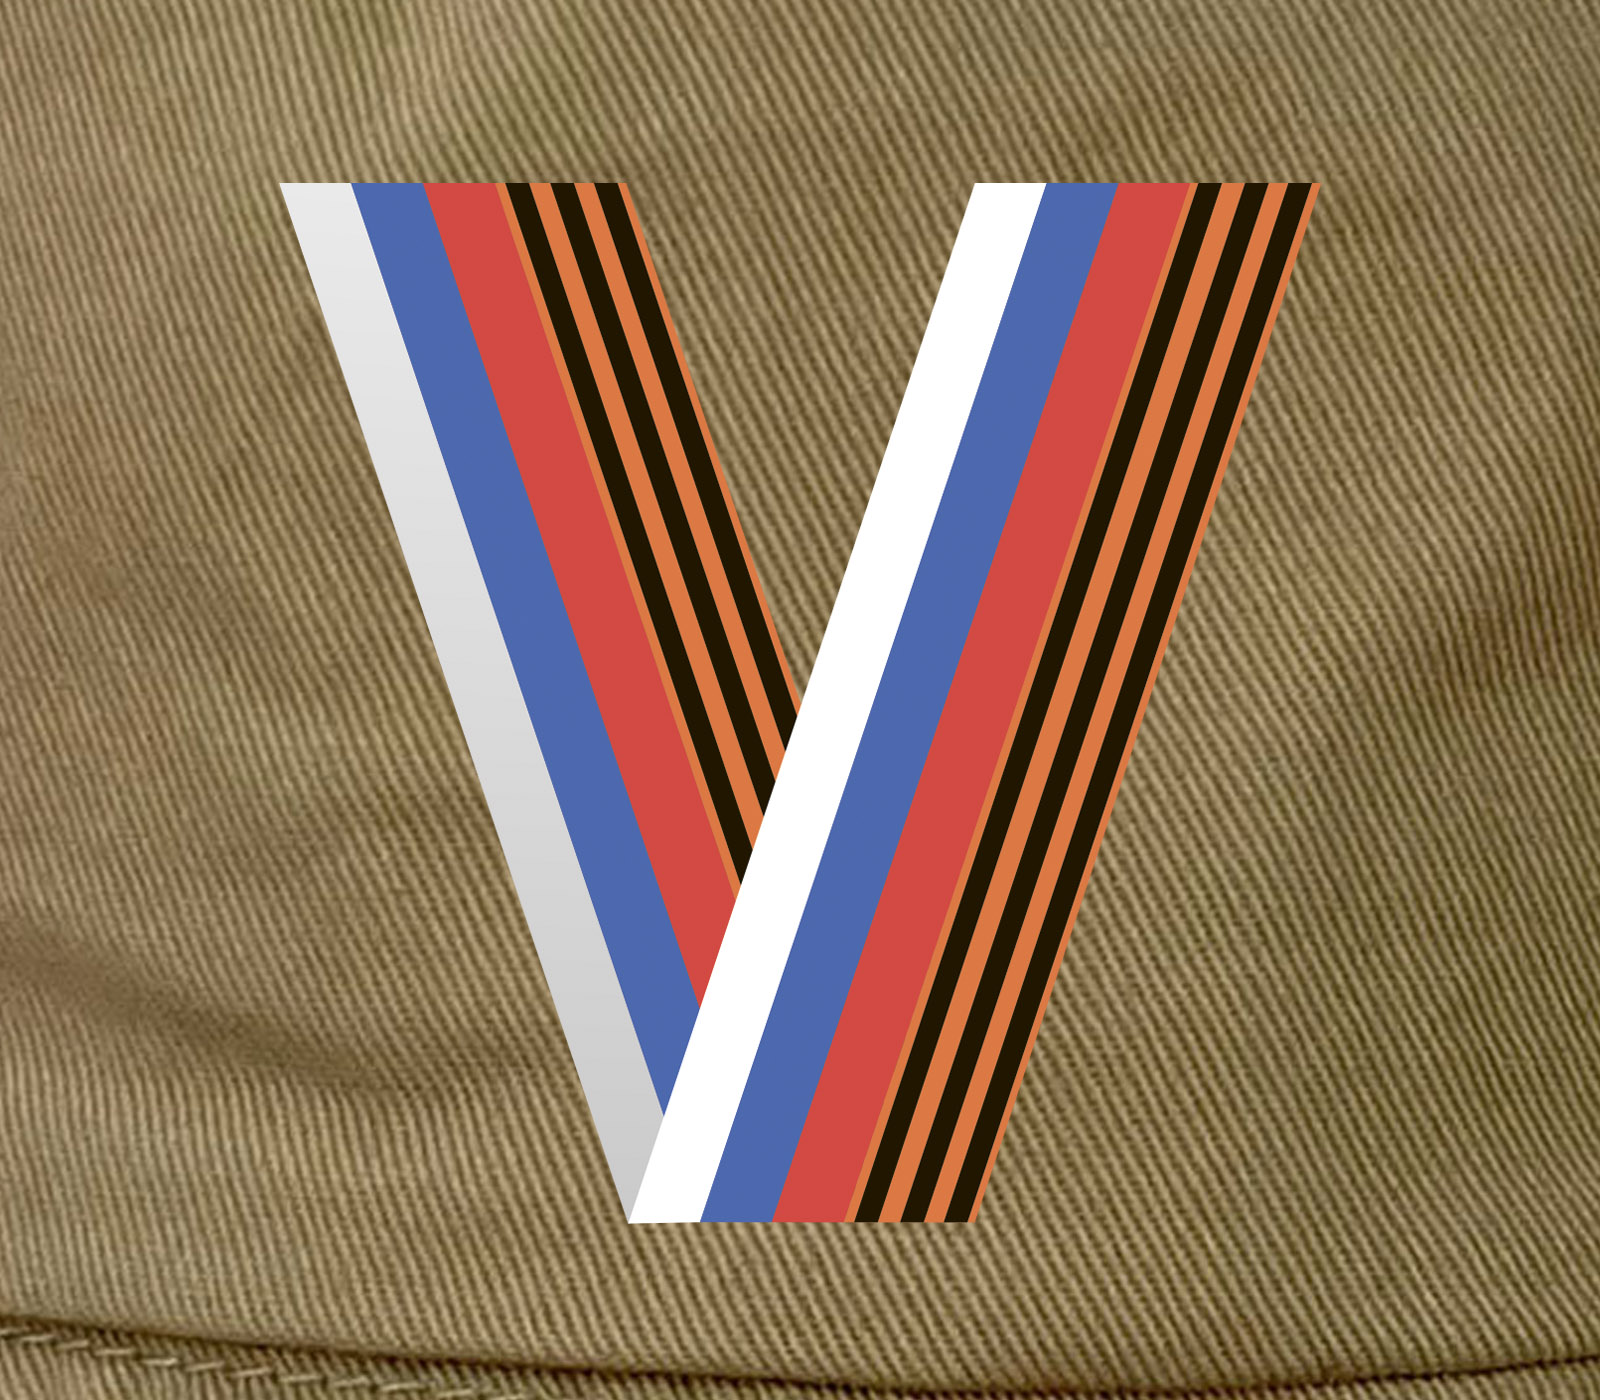 Милитари панама с патриотичным символом V